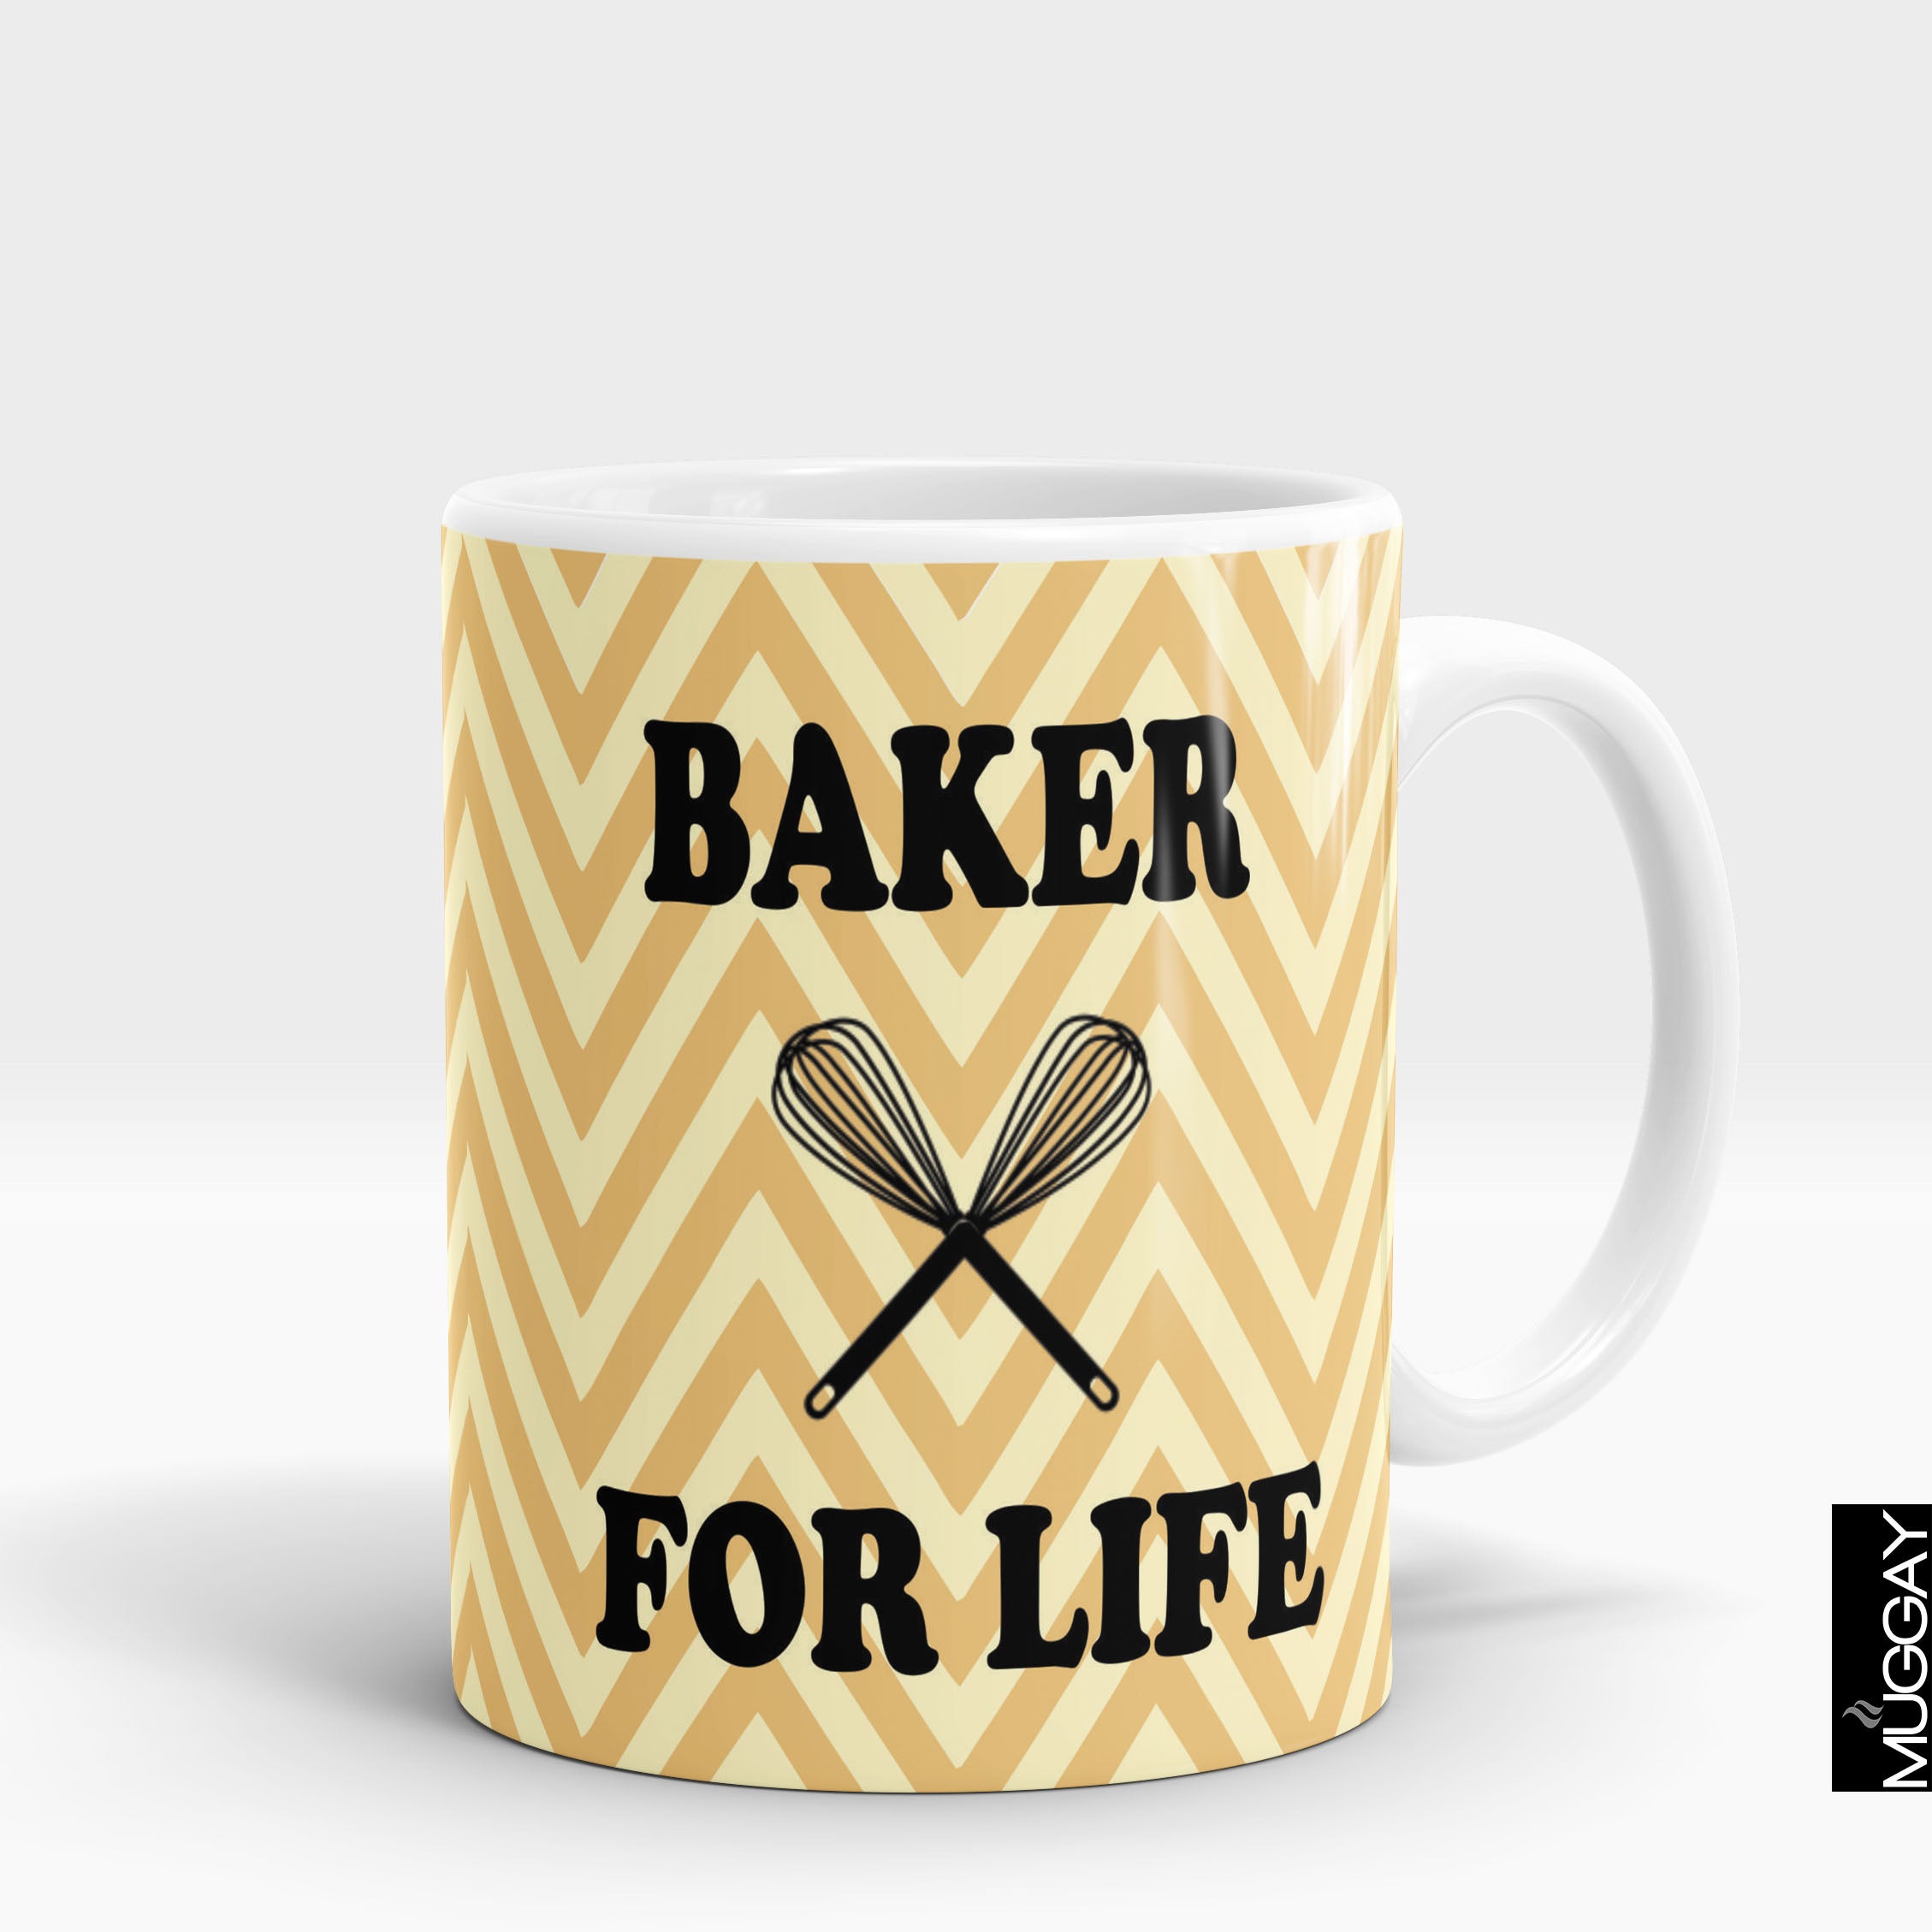 Baking Mug - bkr5 - Muggay.com - Mugs - Printing shop - truck Art mugs - Mug printing - Customized printing - Digital printing - Muggay 